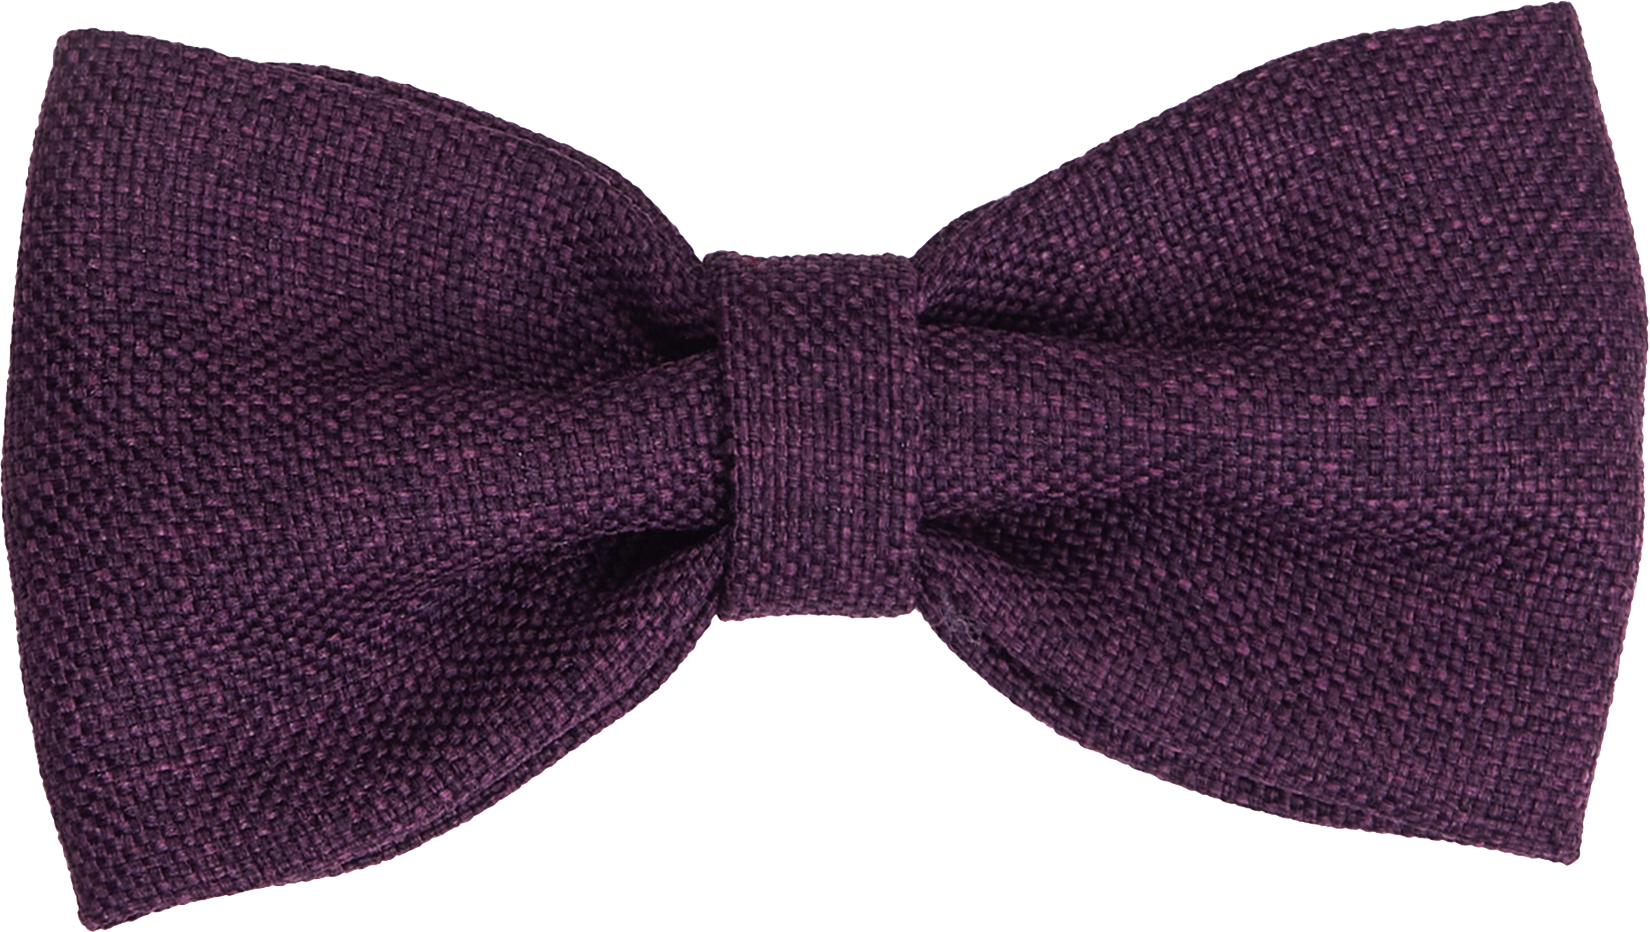 Bow tie lilac hessian fabric